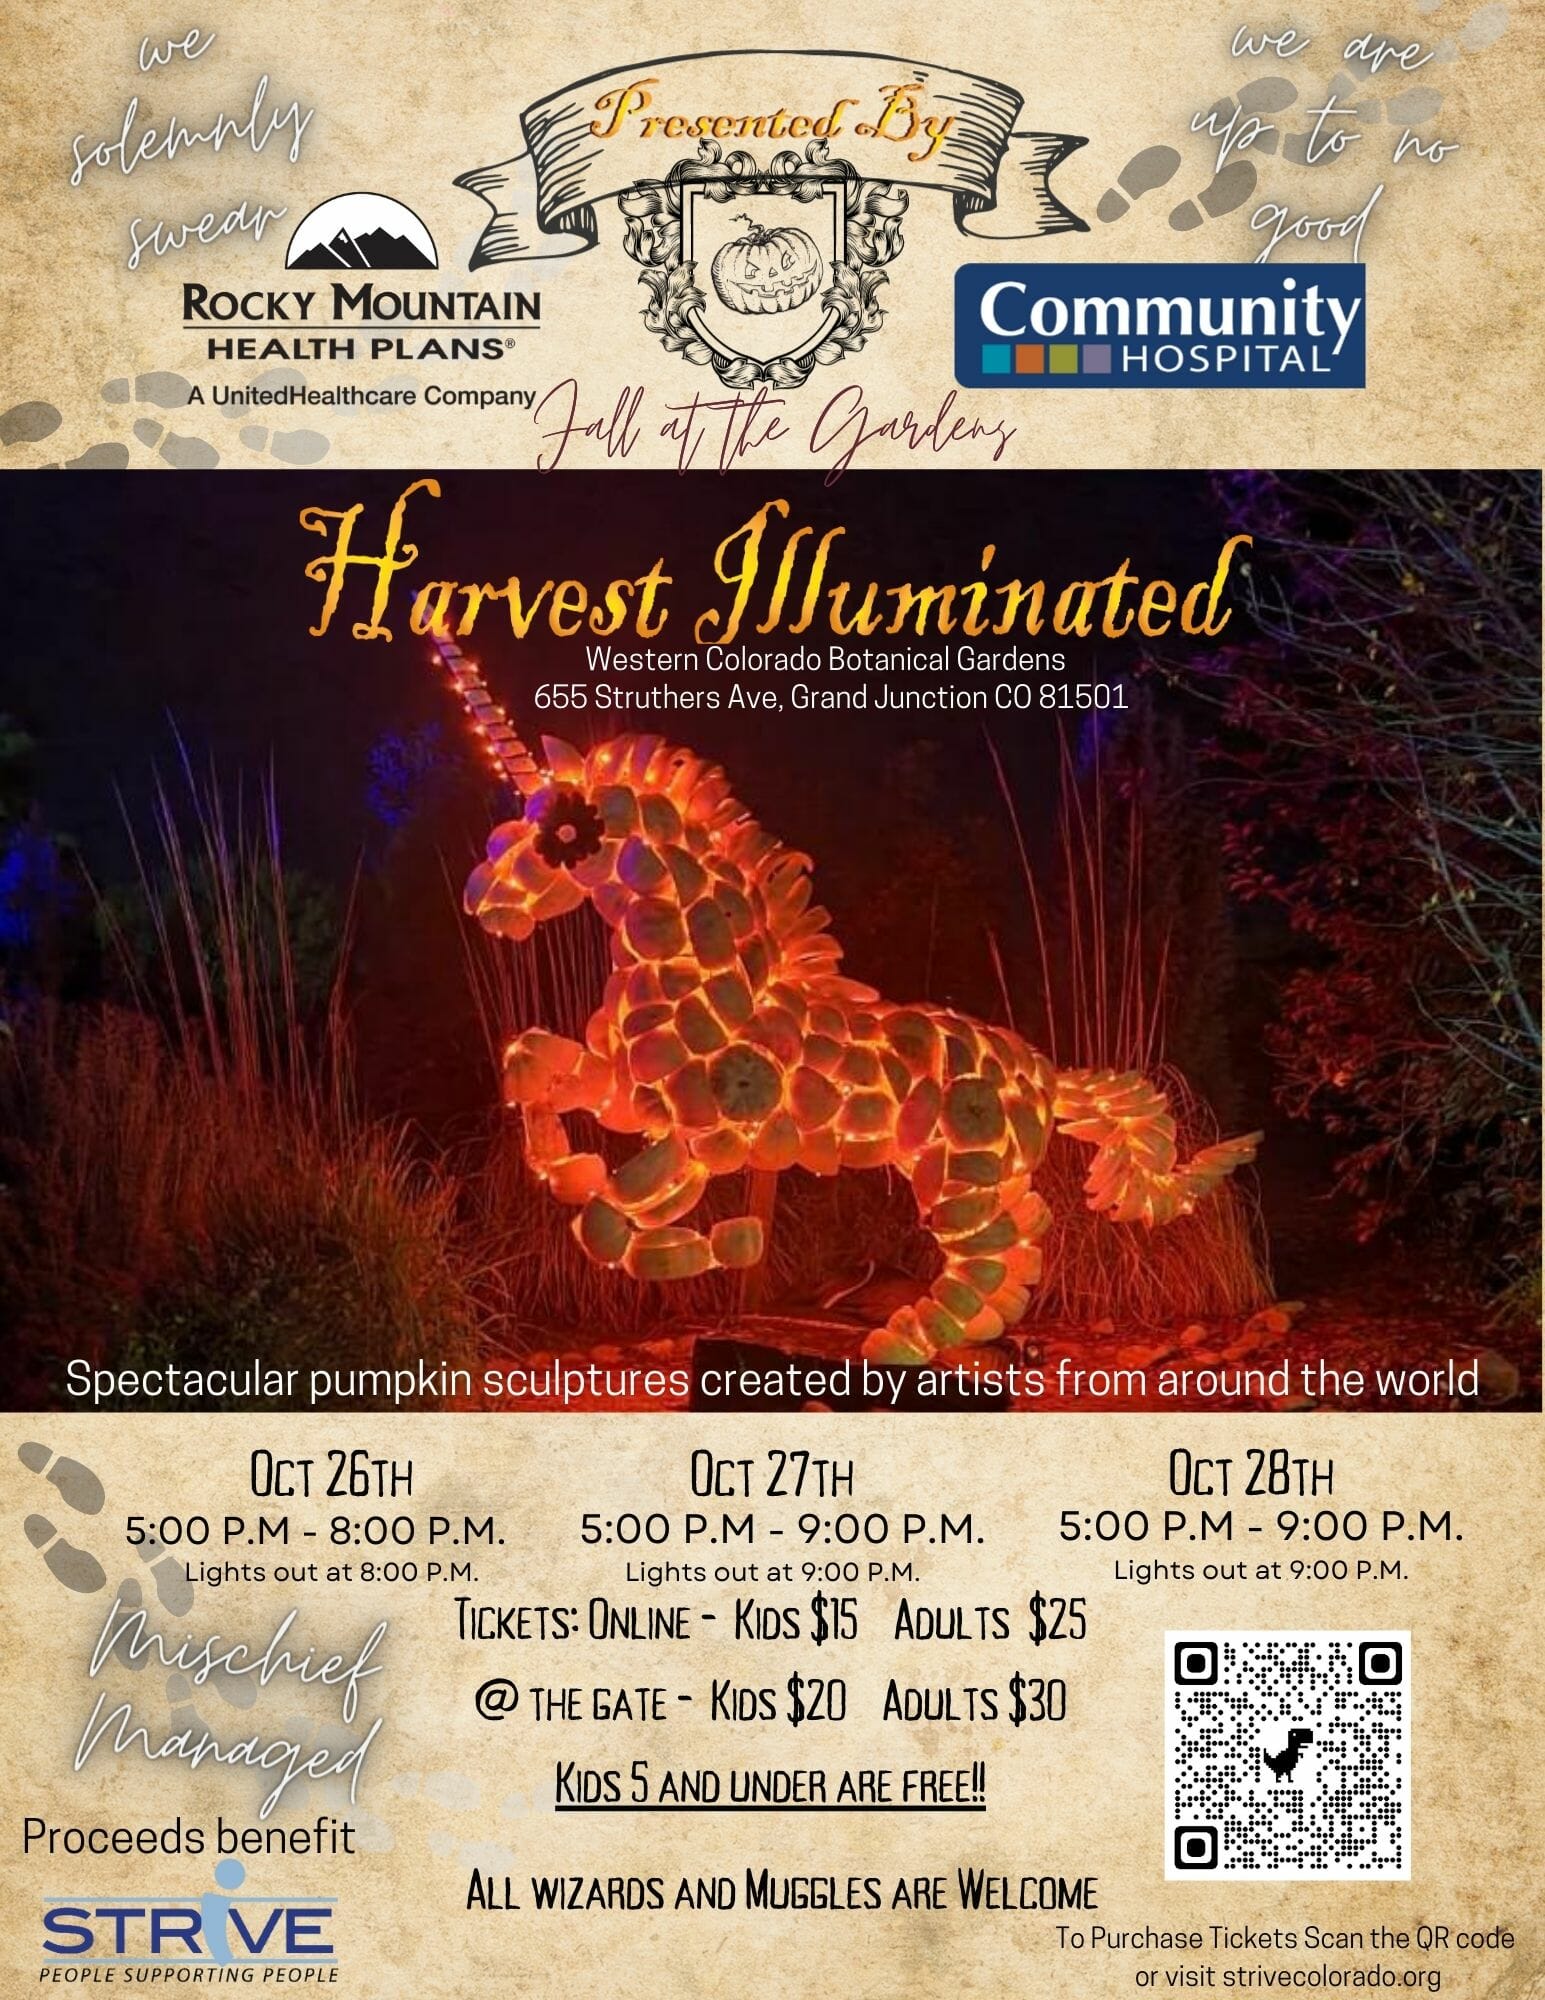 View Harvest Illuminated Event Information